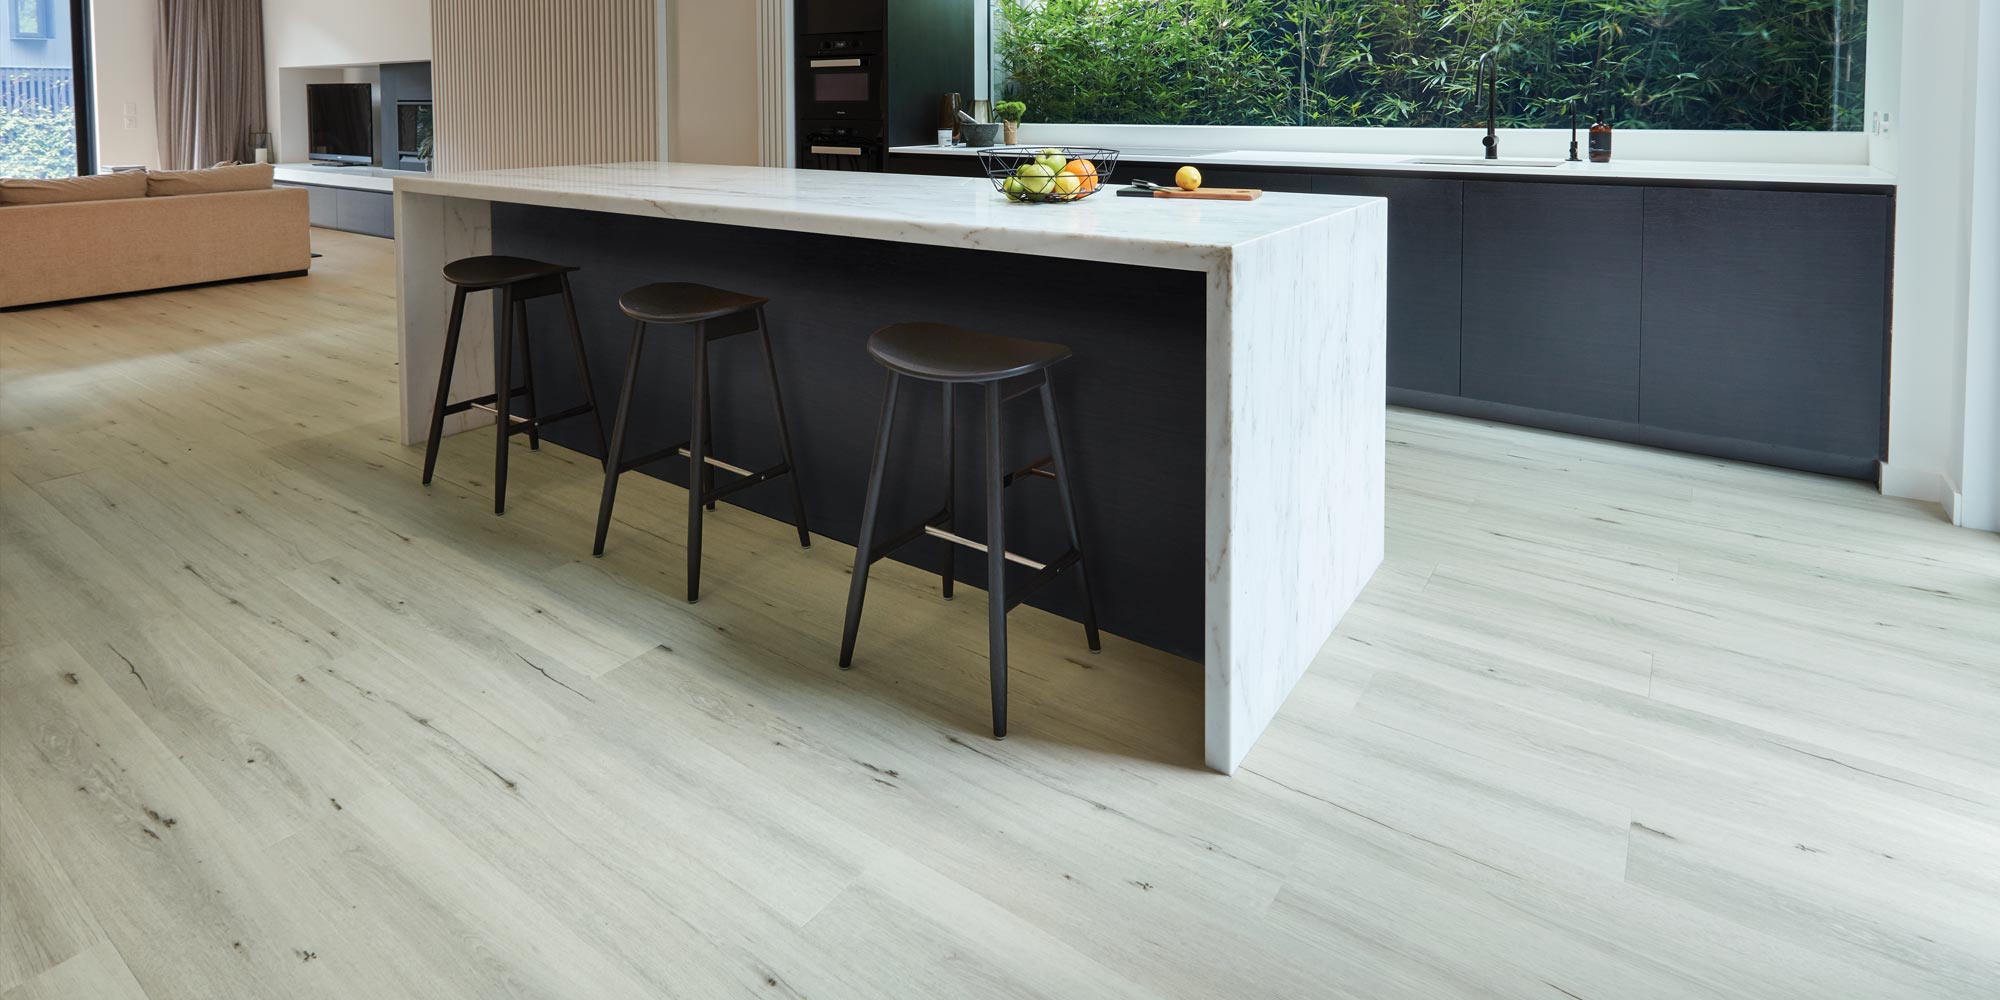 Luxury Vinyl Plank Natural Oak Flooring in Oslo White With Kitchen Bench